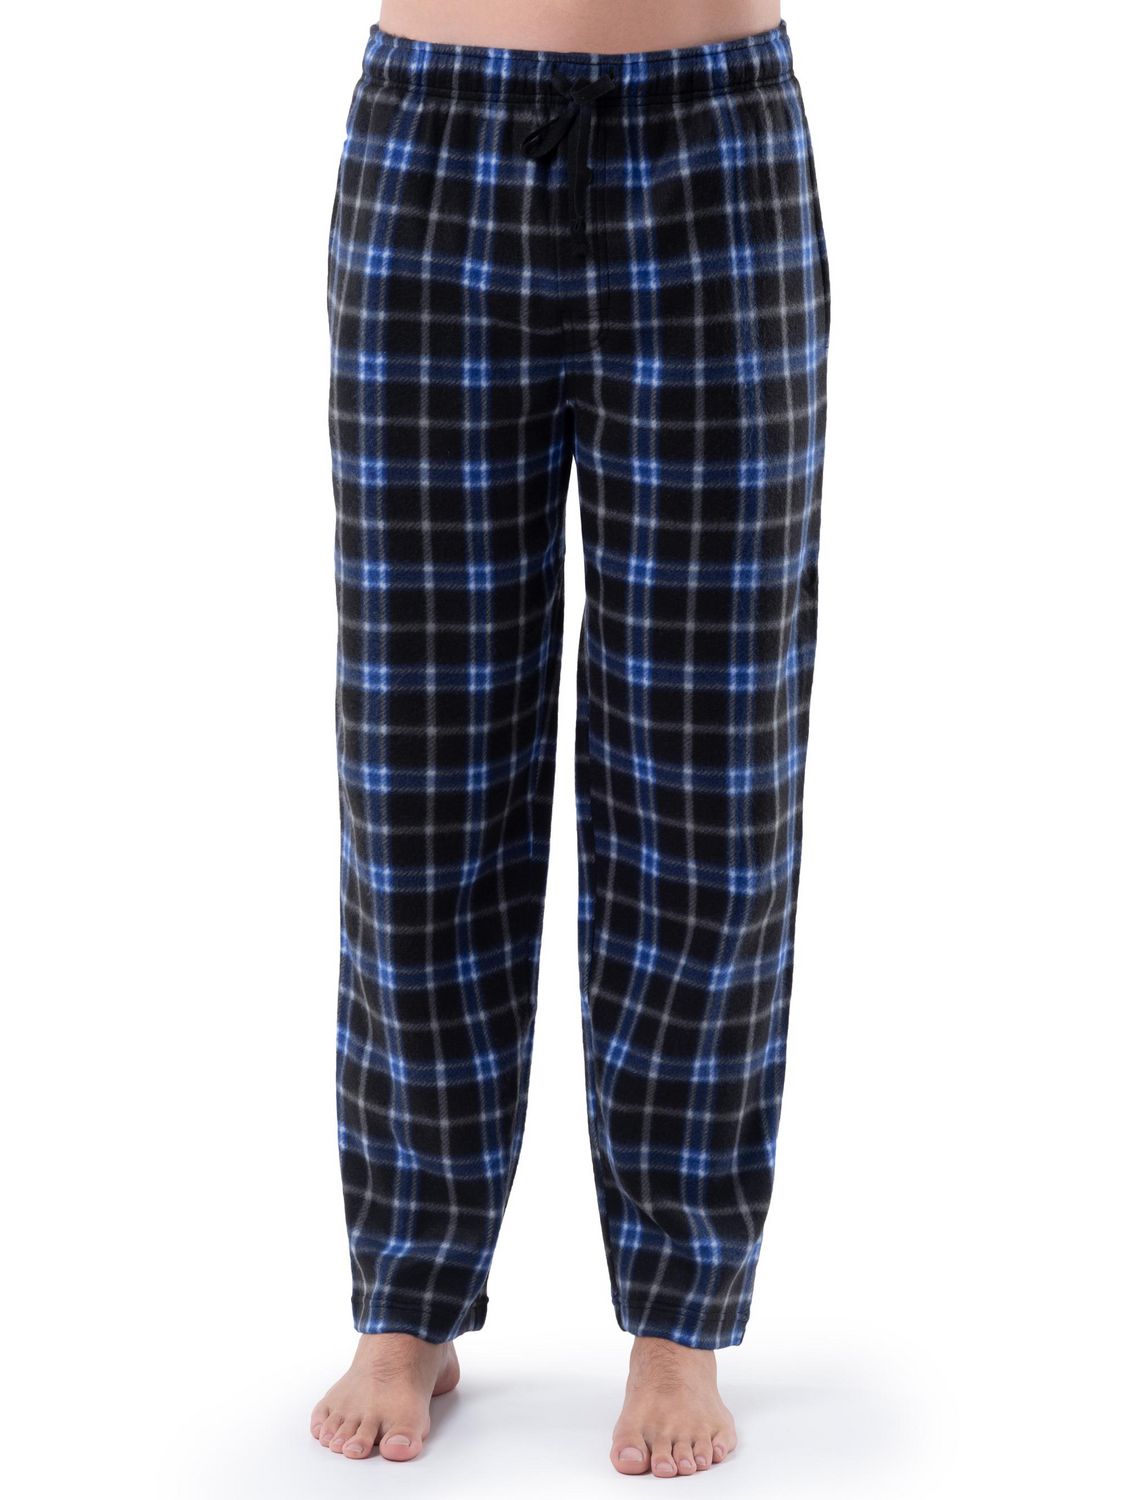 Merona brand Mens fleece plaid pajama pants Blue  Size XL  Rick